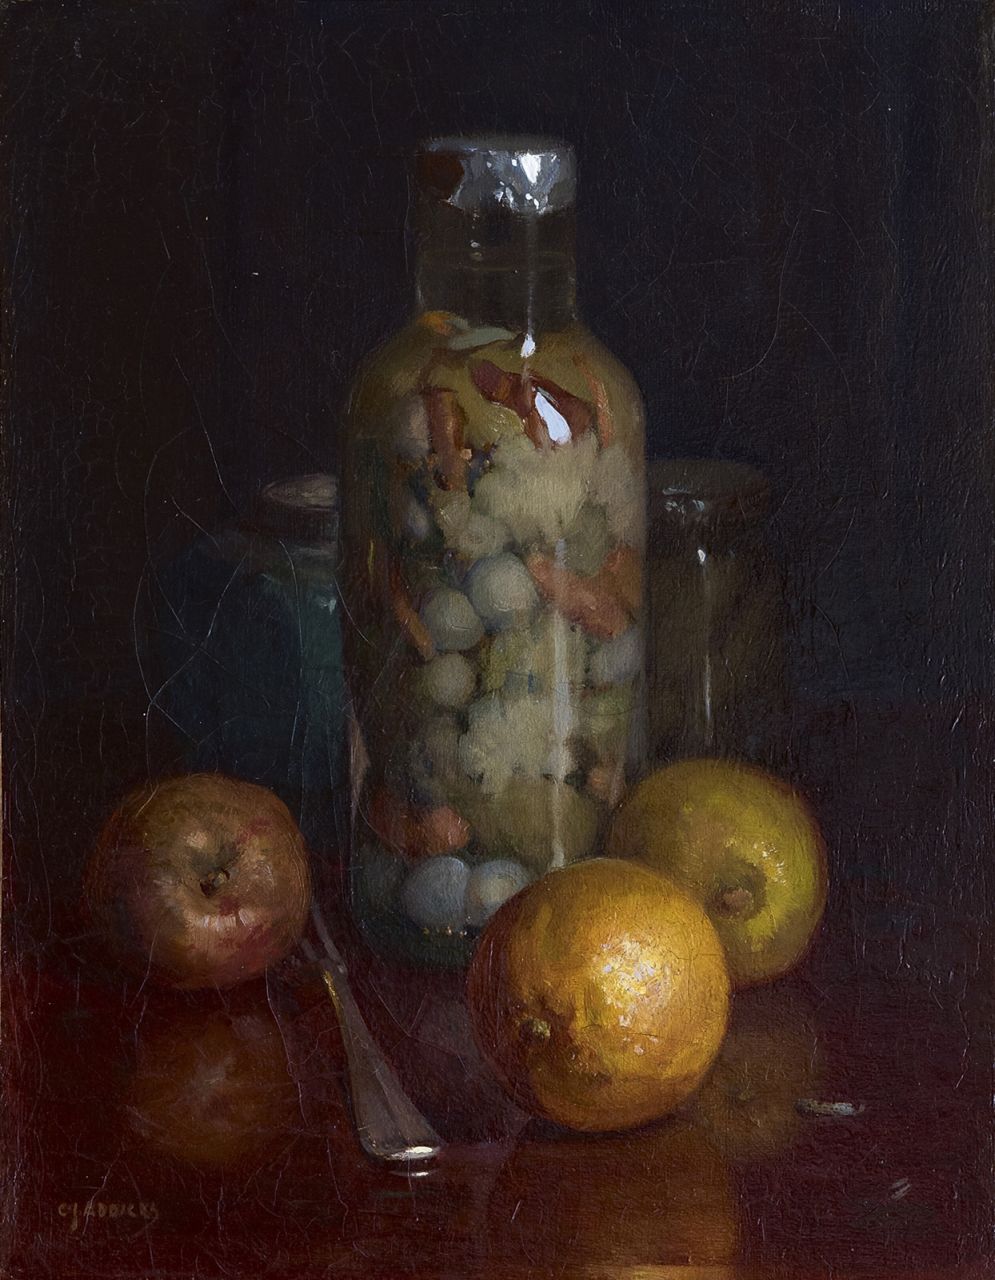 Addicks C.J.  | 'Christiaan' Johannes Addicks, Stilleven met glazen weckpot en fruit, olieverf op doek 35,8 x 27,8 cm, gesigneerd linksonder